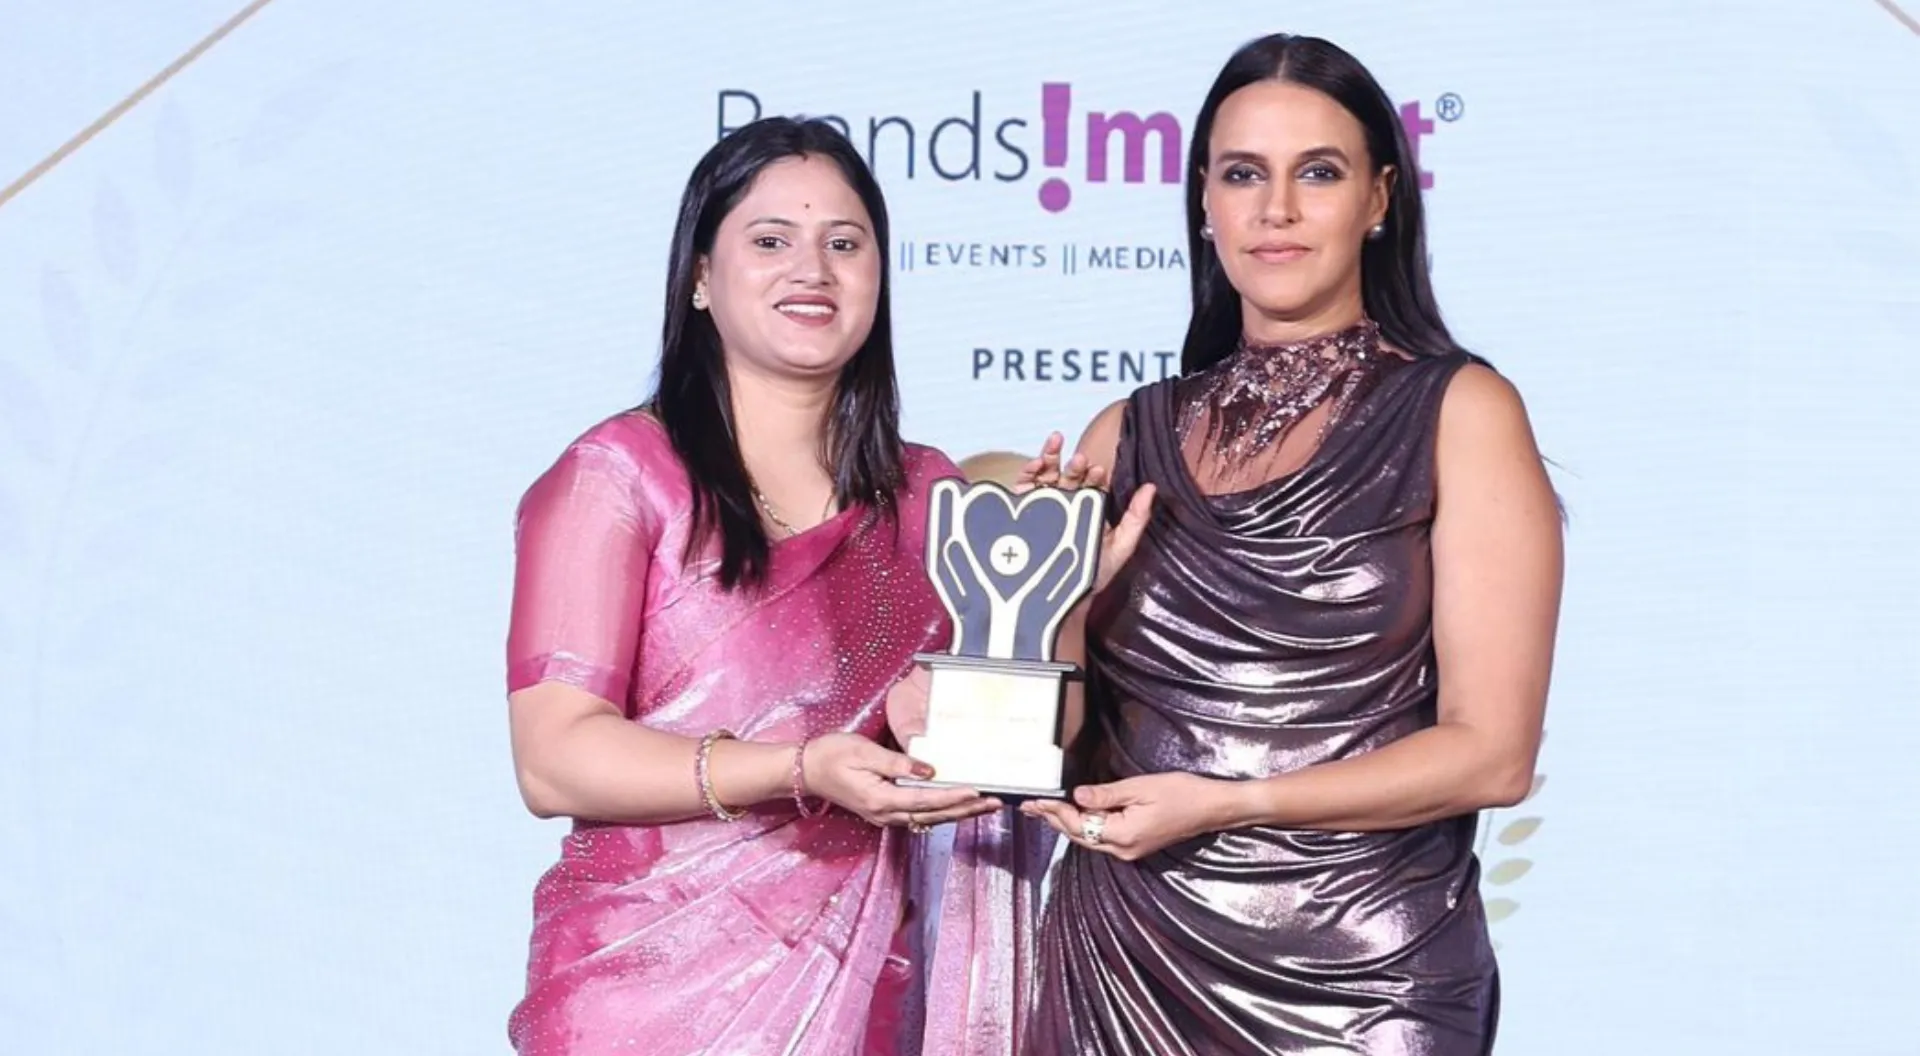 Awards Taken by Neha Dhupia at Brands impact.